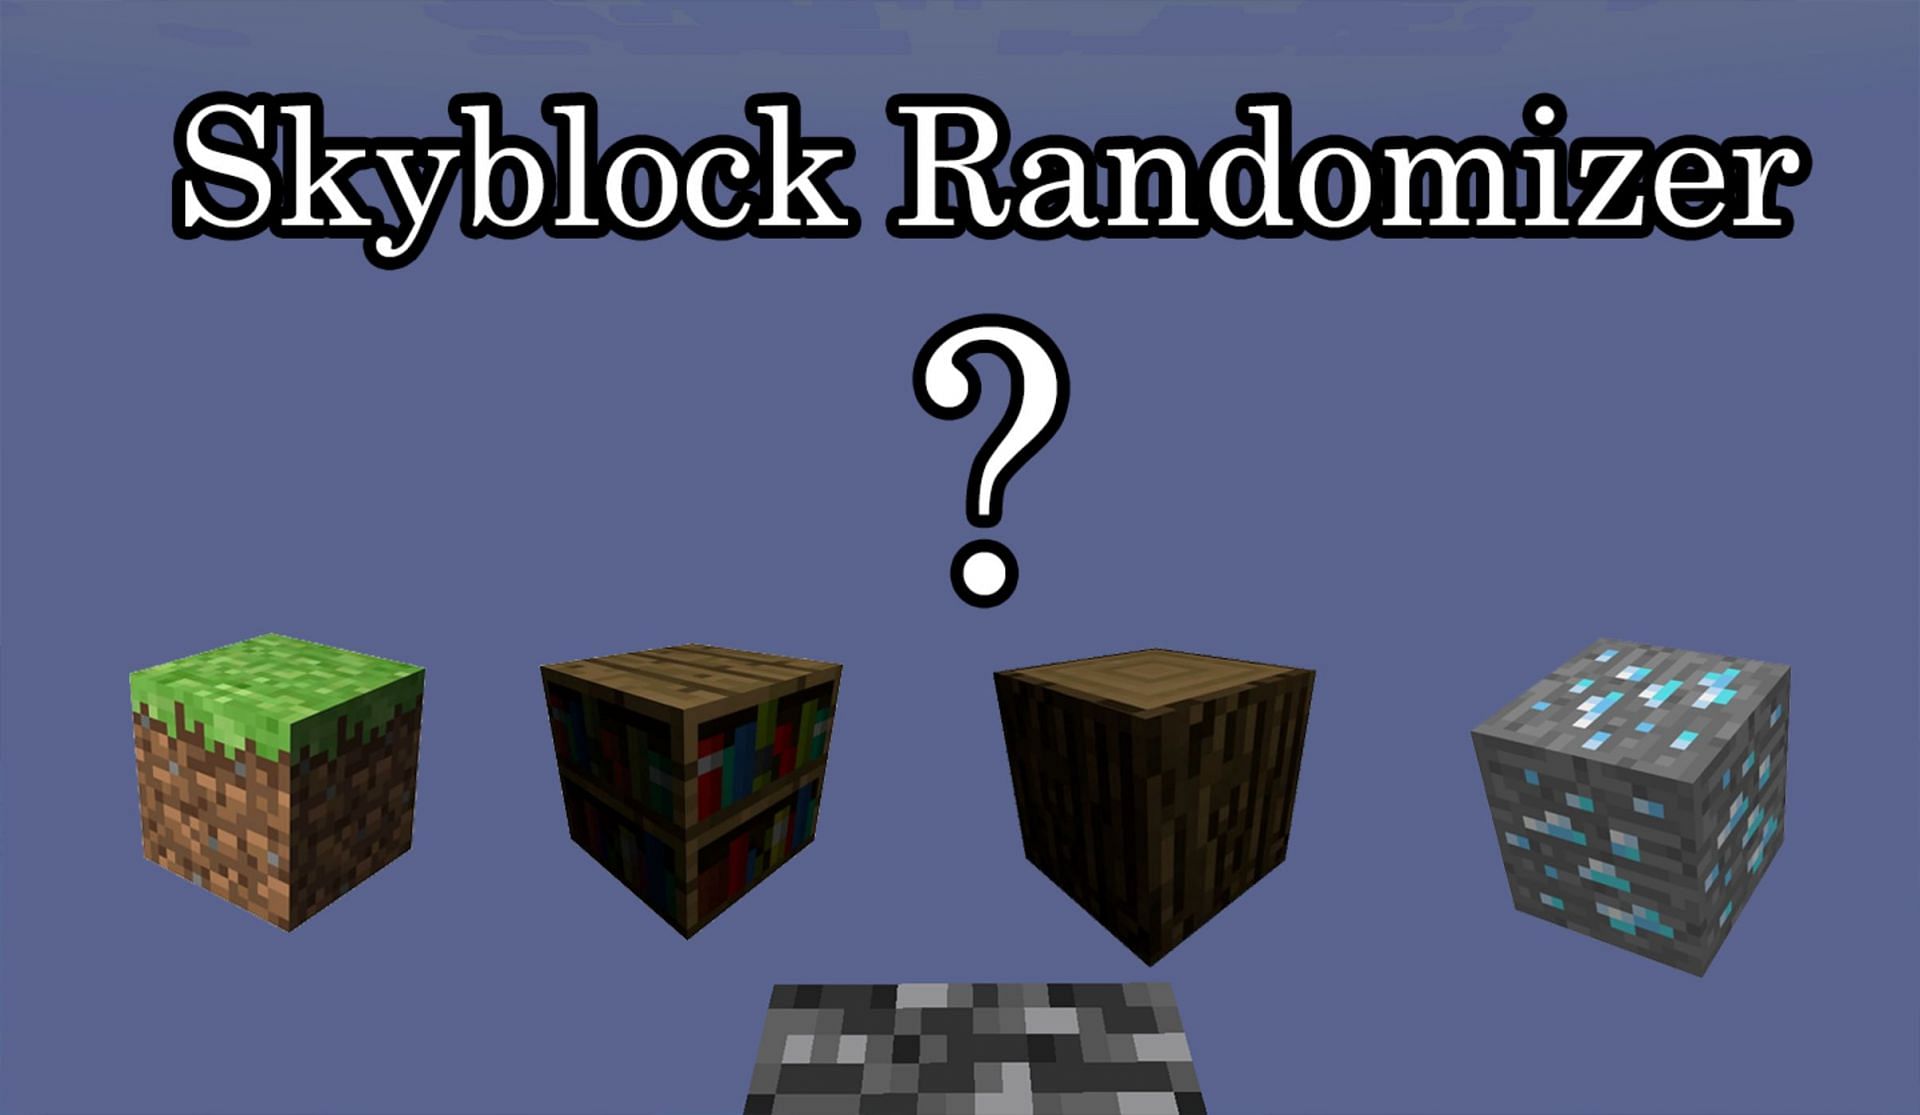 SkyBlock Randomizer was partially inspired by Youtuber Wilbur Soot (Image via MinecraftMaps)